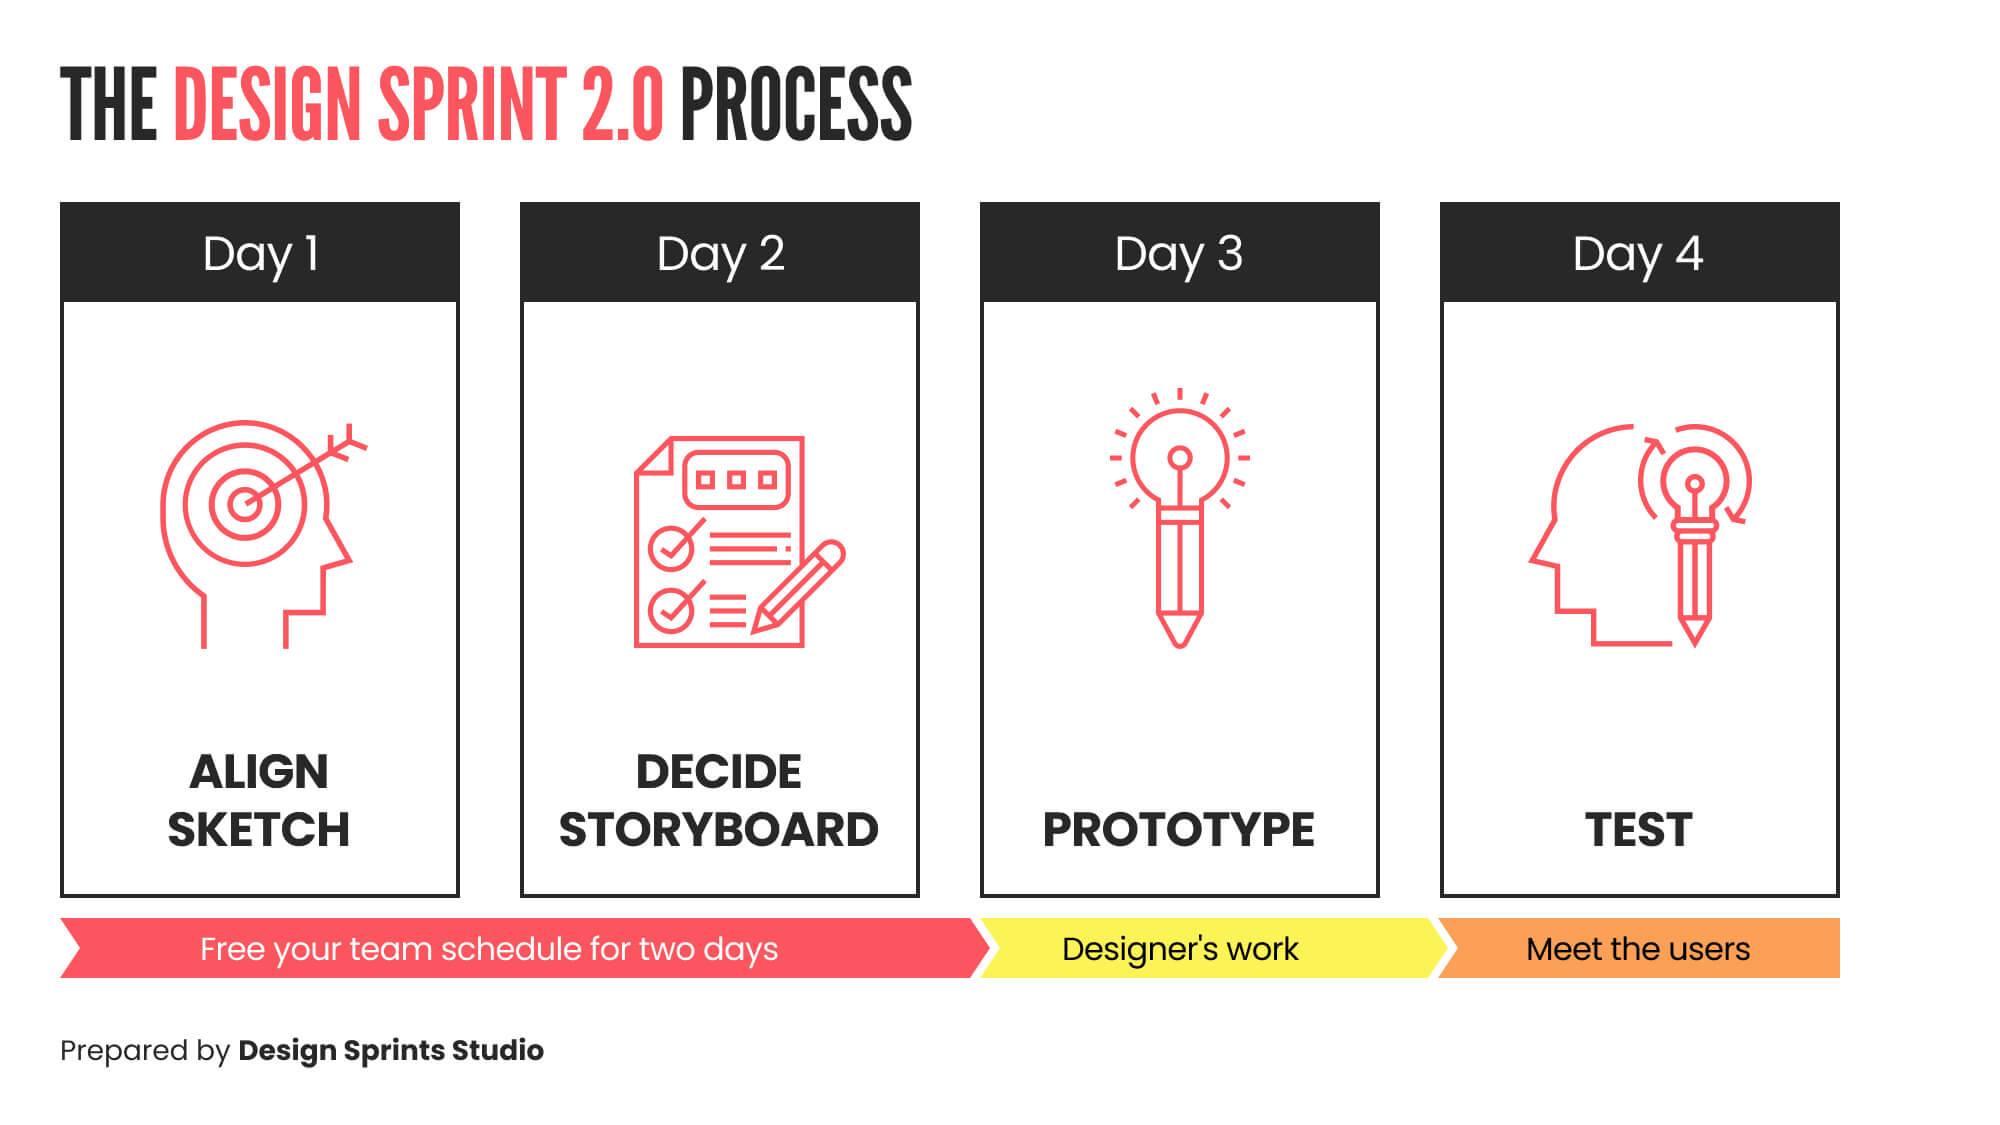 The Design Sprint 2.0 Process